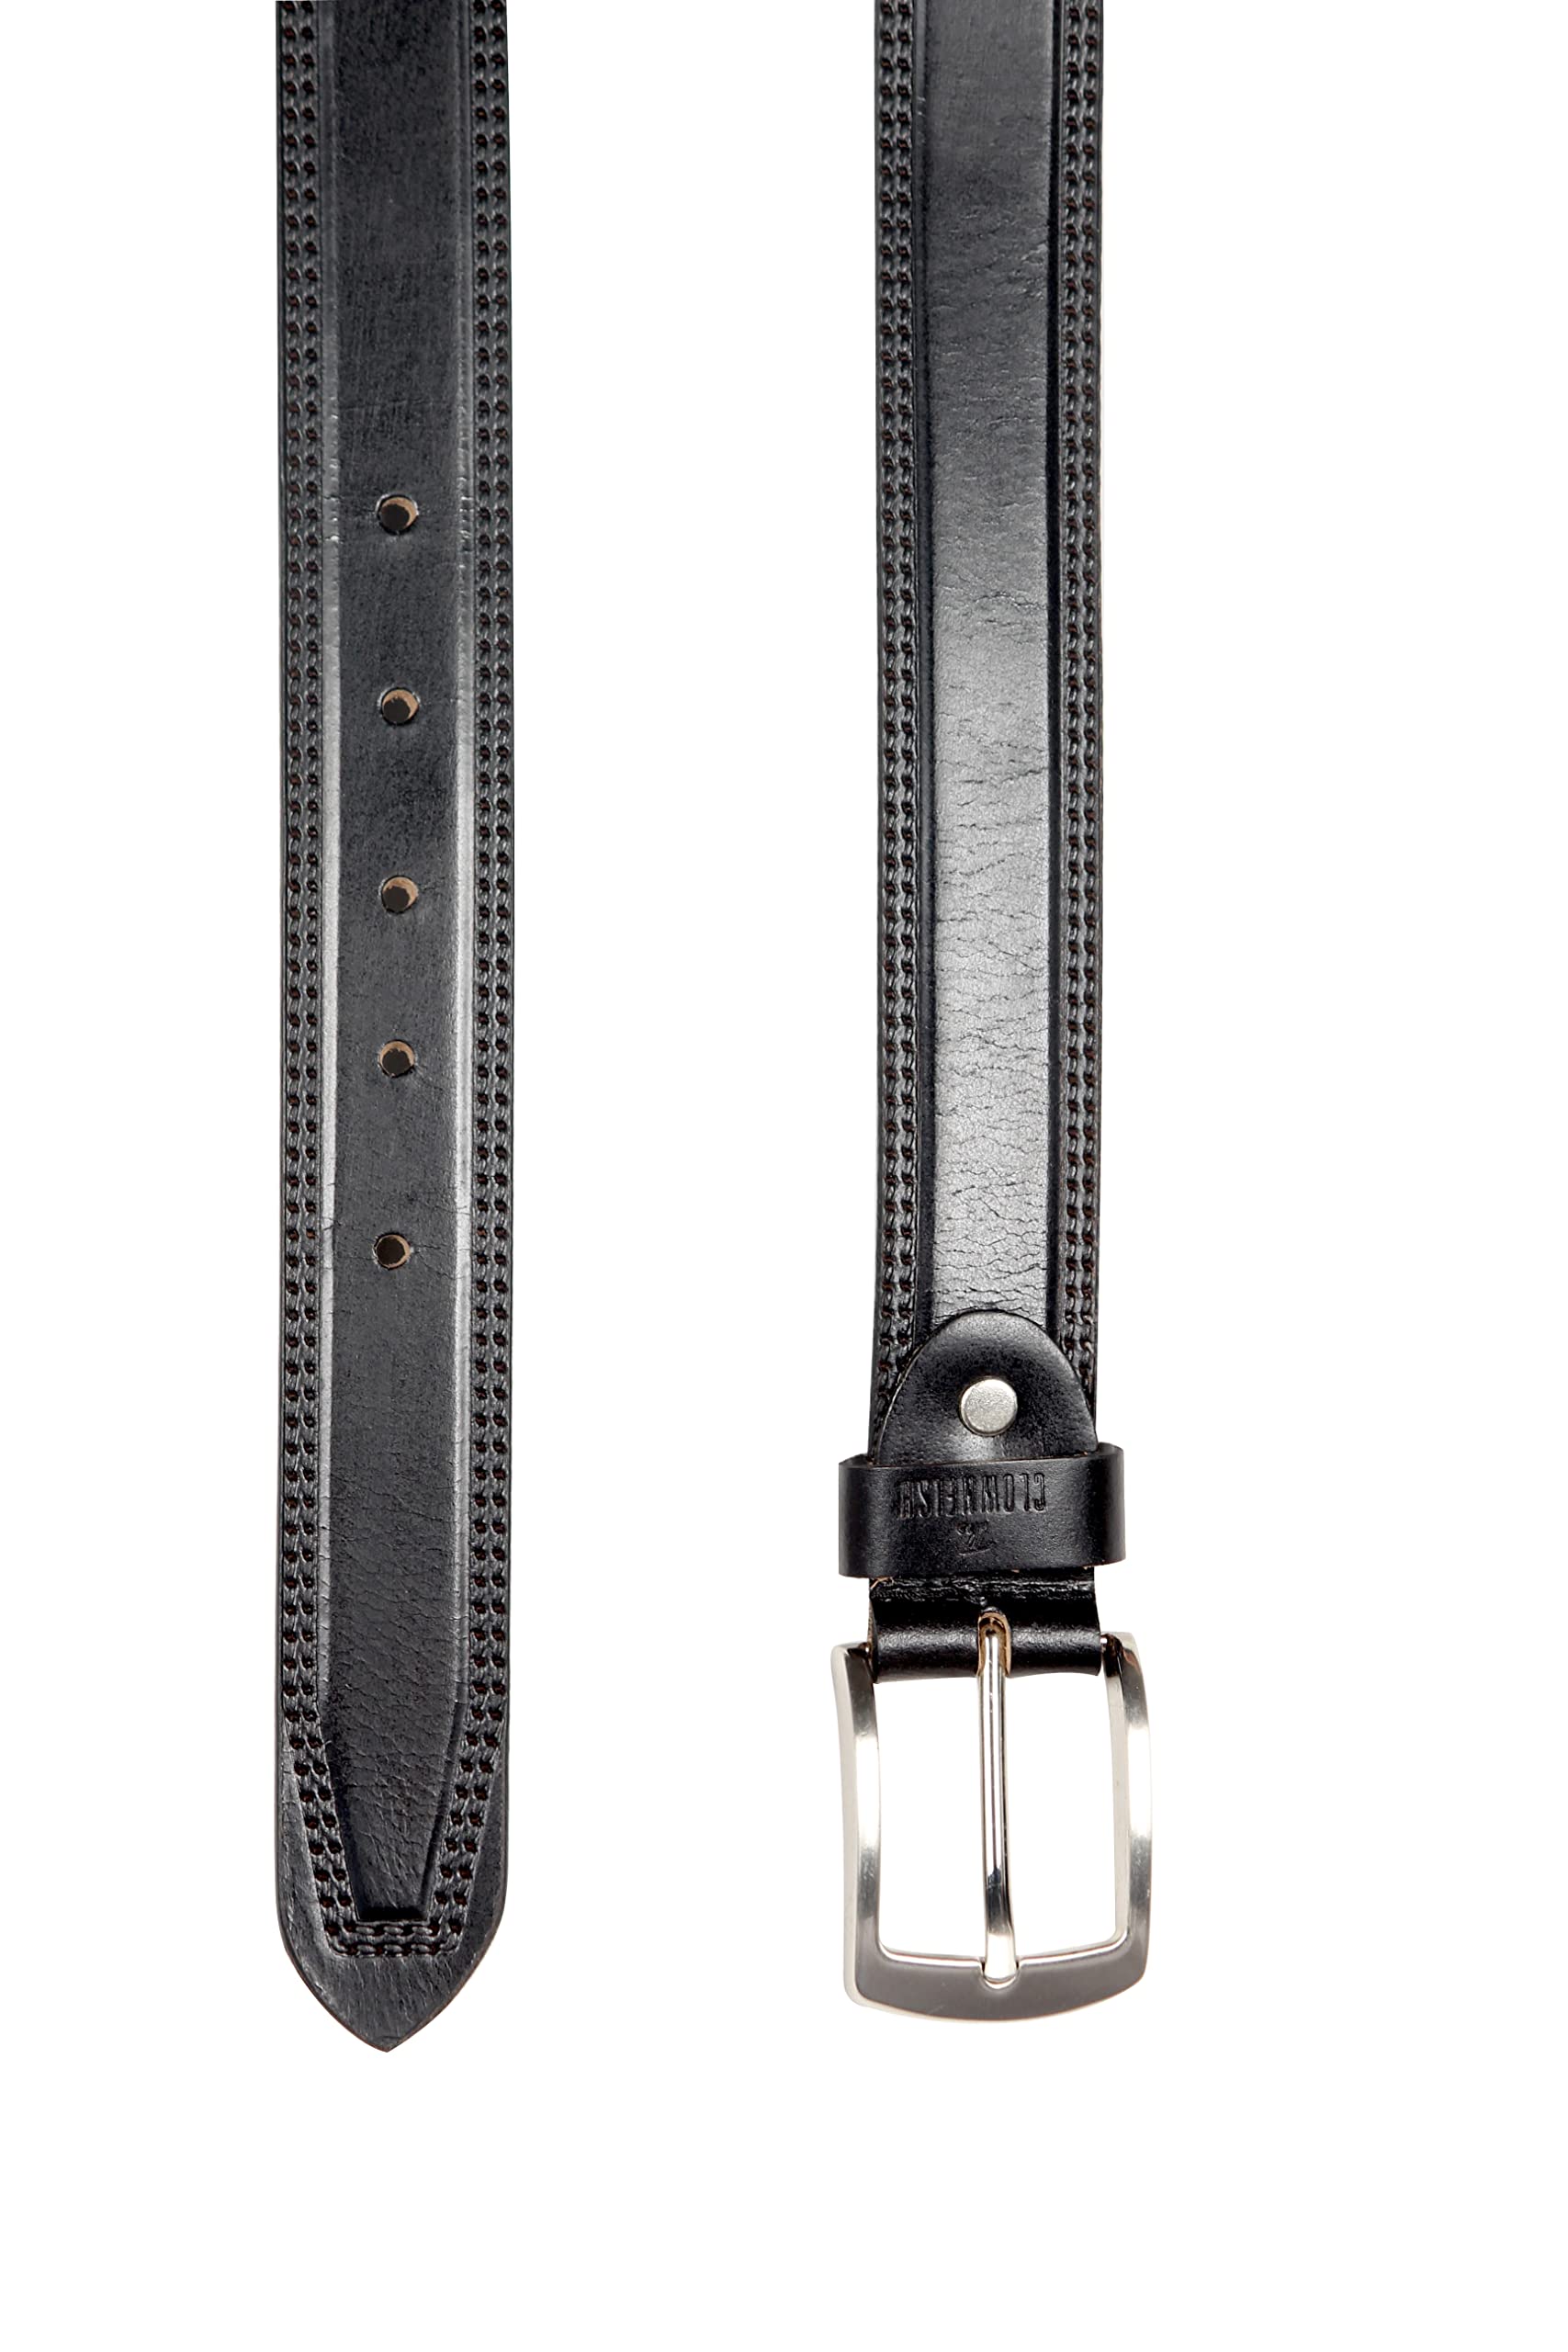 The Clownfish Men's Genuine Leather Belt 36 Inch Coal Black